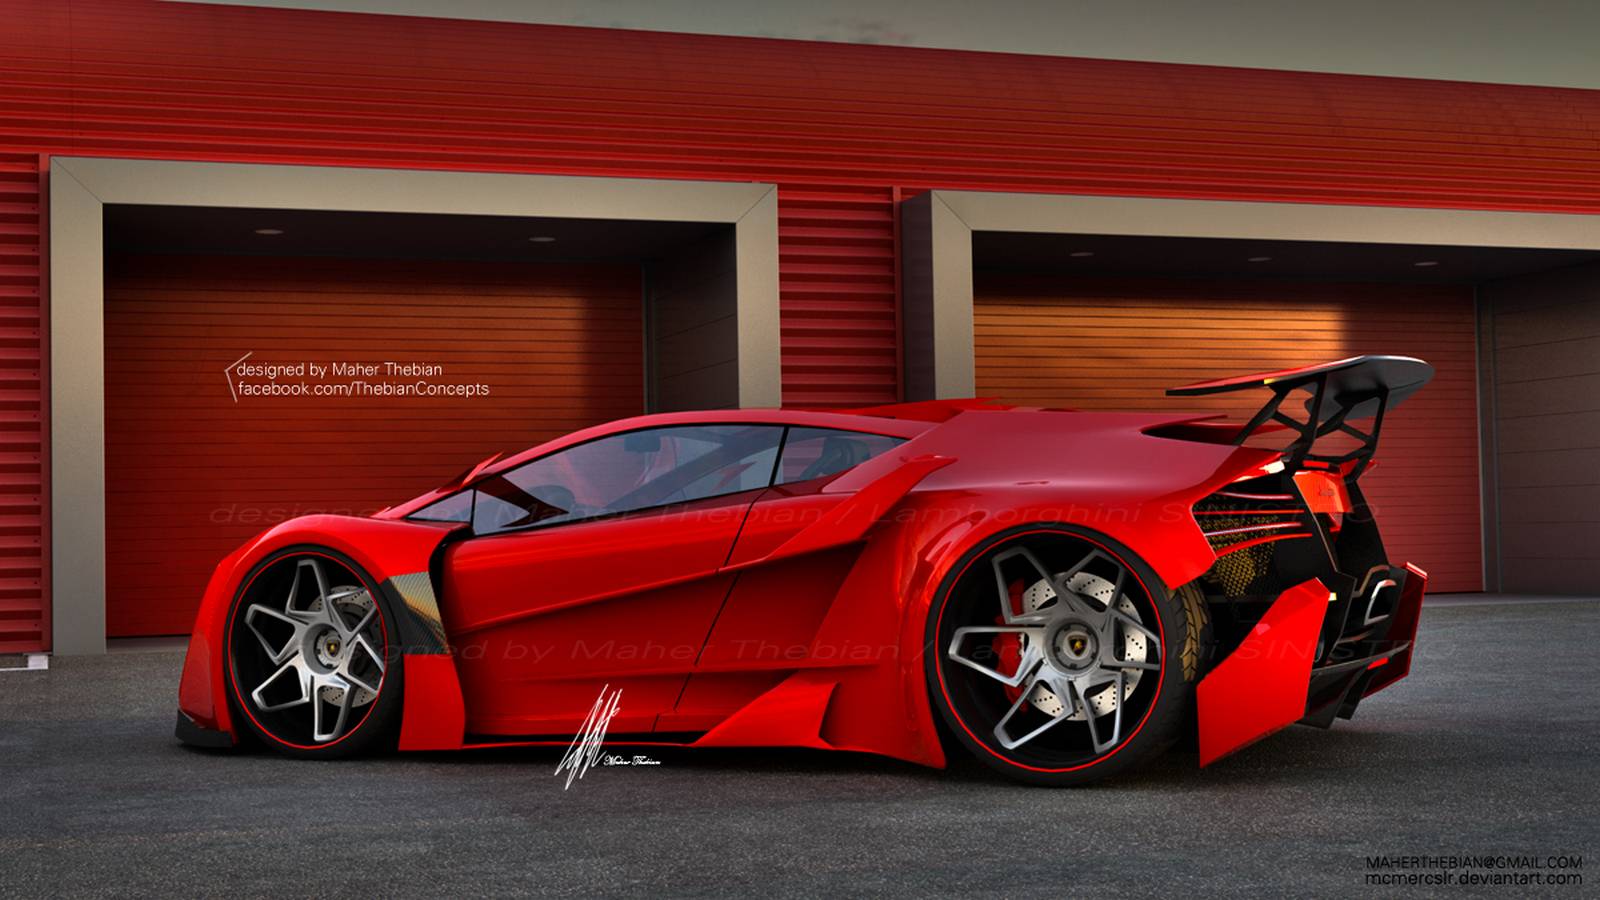 Amazing Lamborghini Sinistro Pictures & Backgrounds